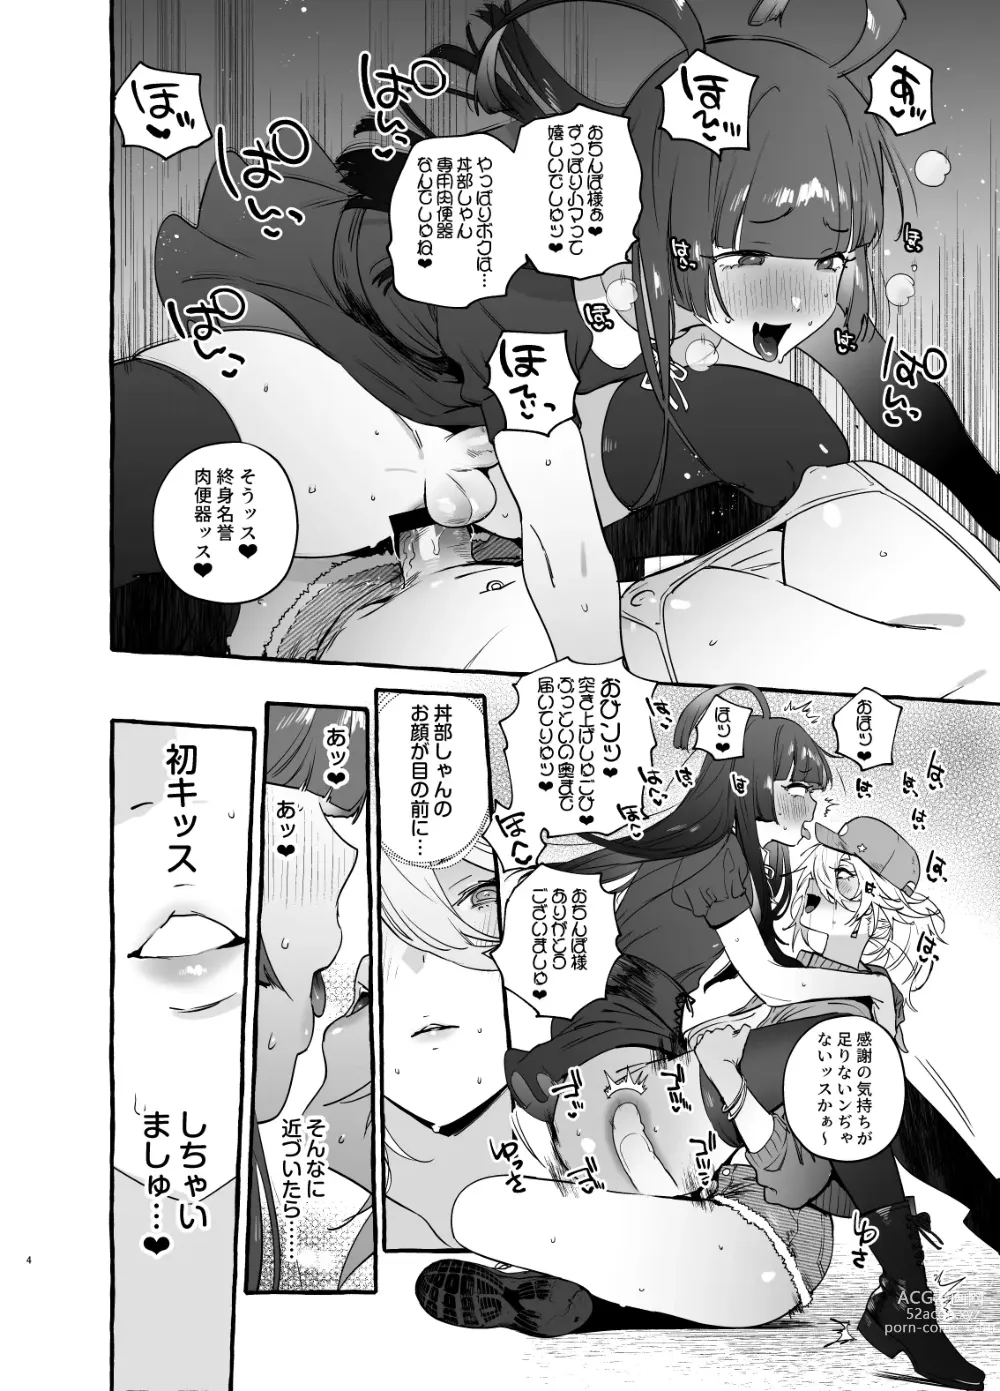 Page 6 of doujinshi Wotasa no Gyaru VS Jirai Otoko